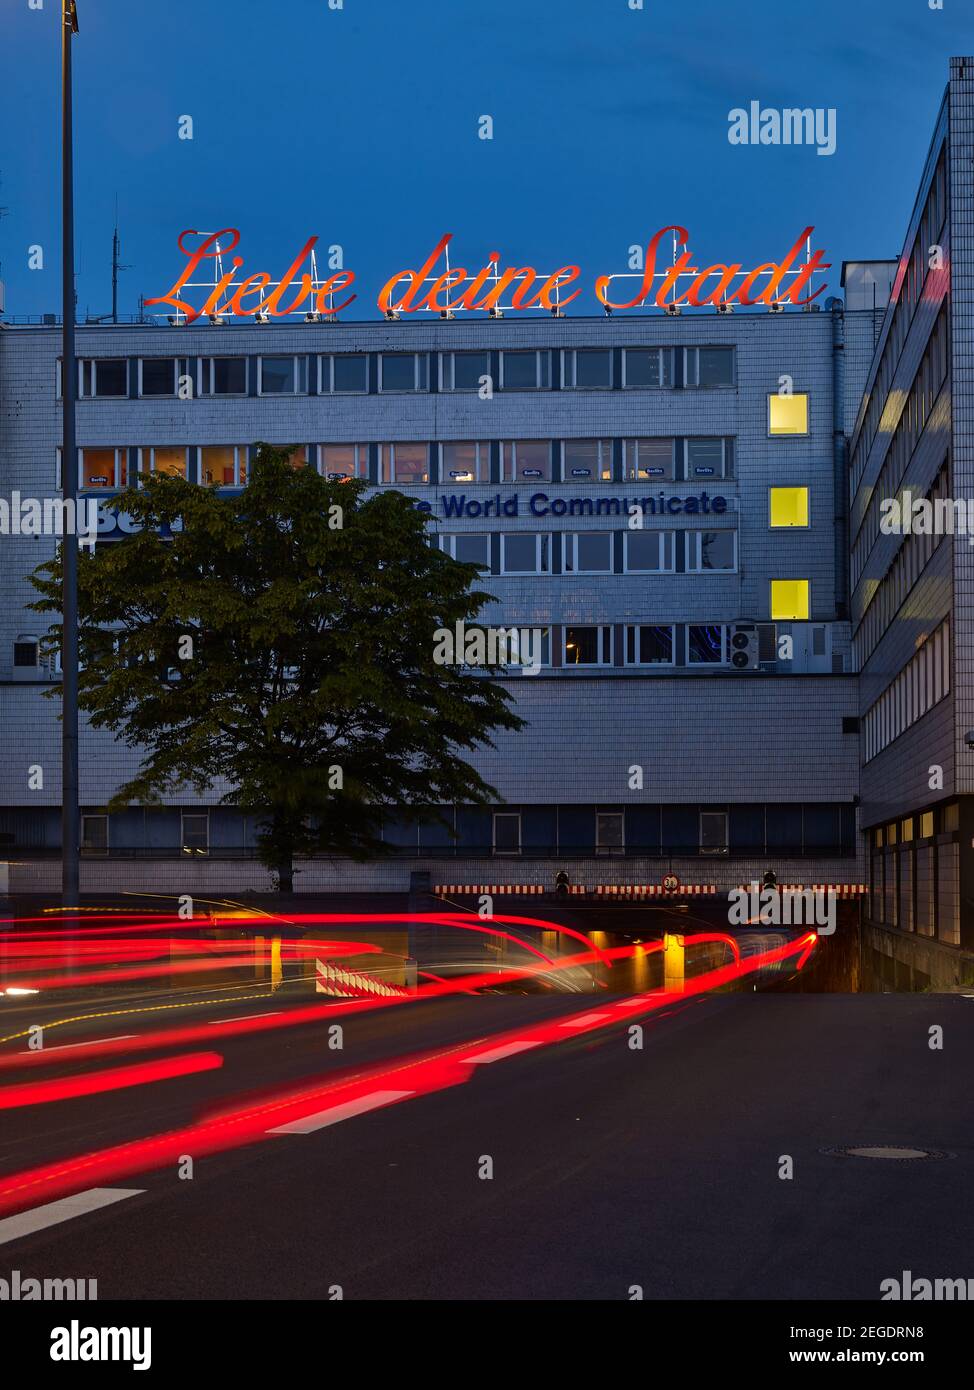 Letras iluminadas 'Liebe deine Stadt' o 'Love your City', foto nocturna, Colonia, Alemania, Europa Foto de stock